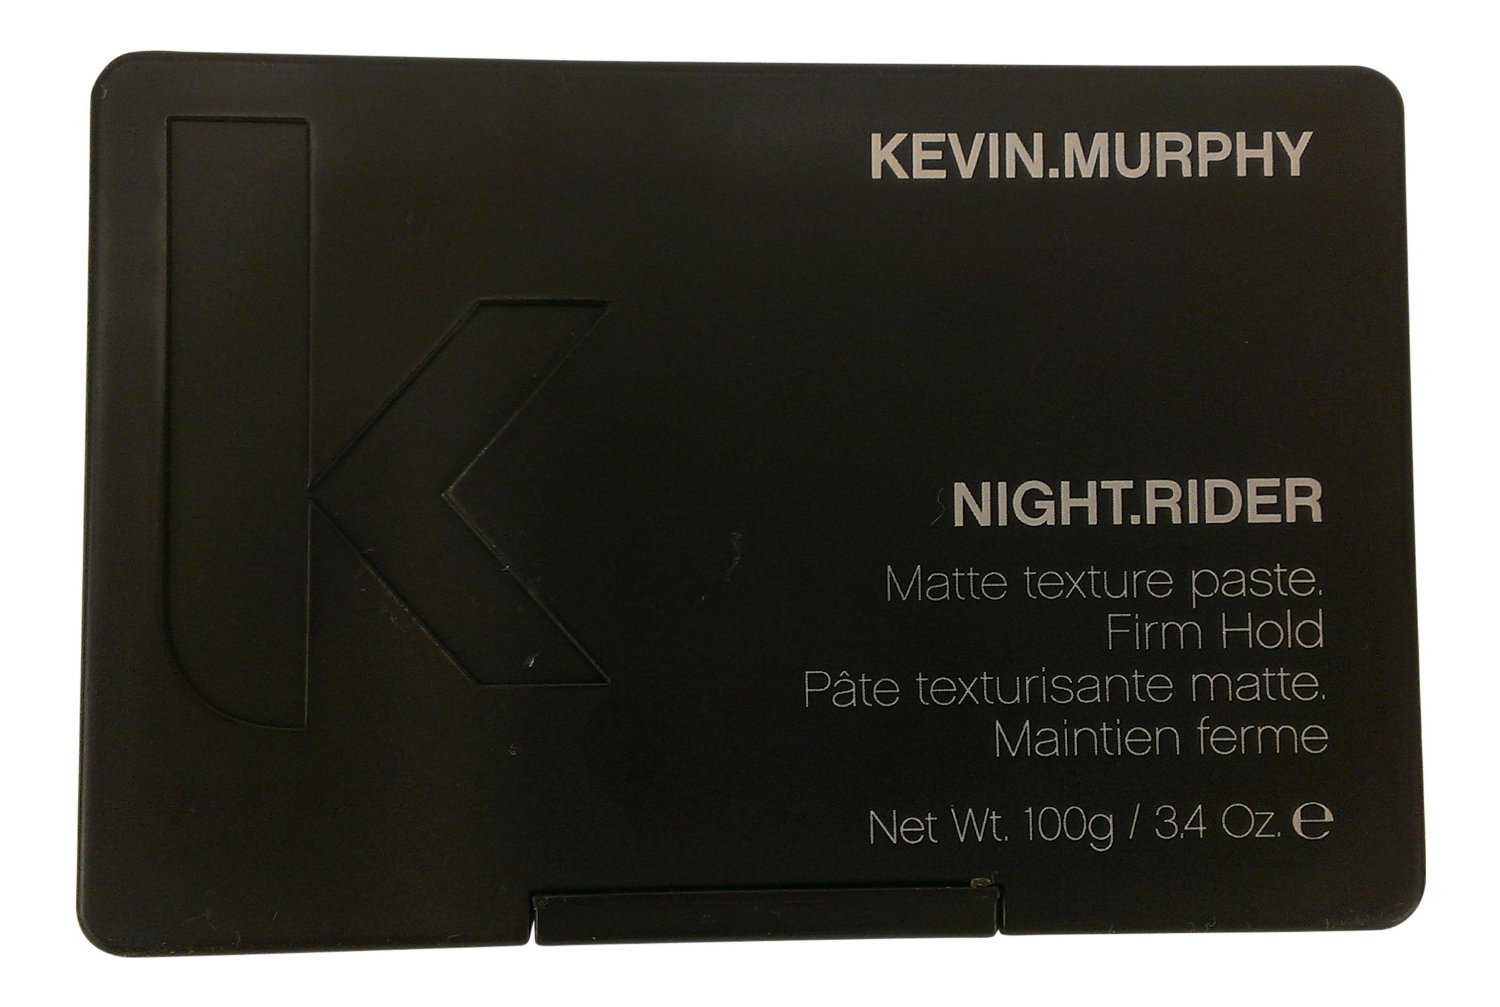 KEVIN MURPHY NIGHT RIDER PASTE